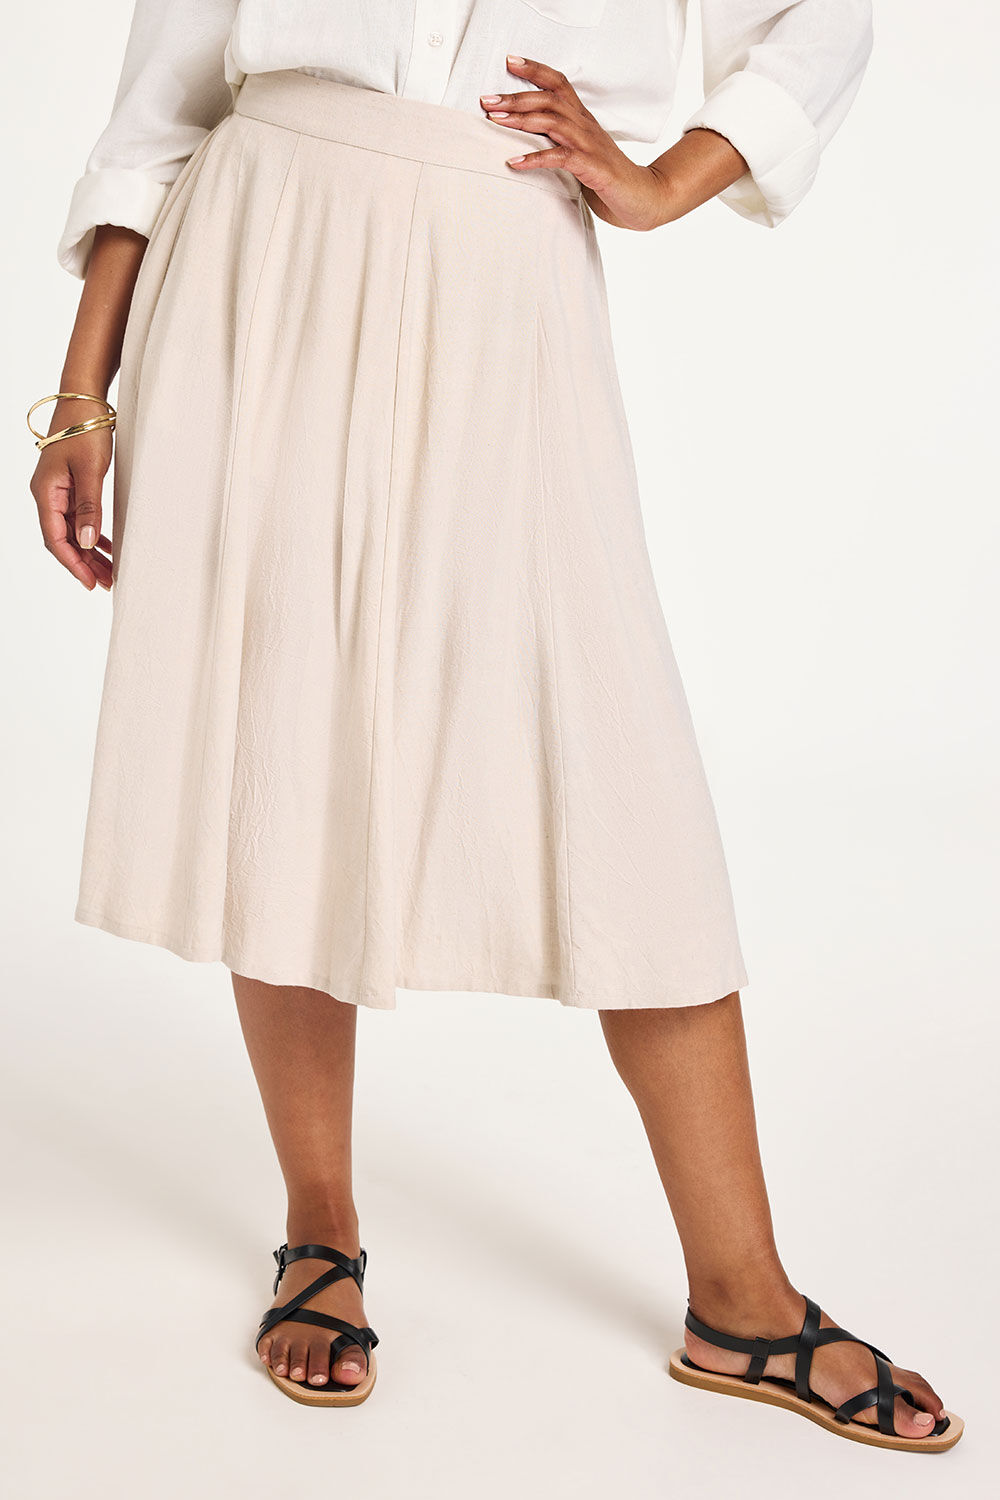 Bonmarche Stone Plain Flippy Skirt, Size: 28